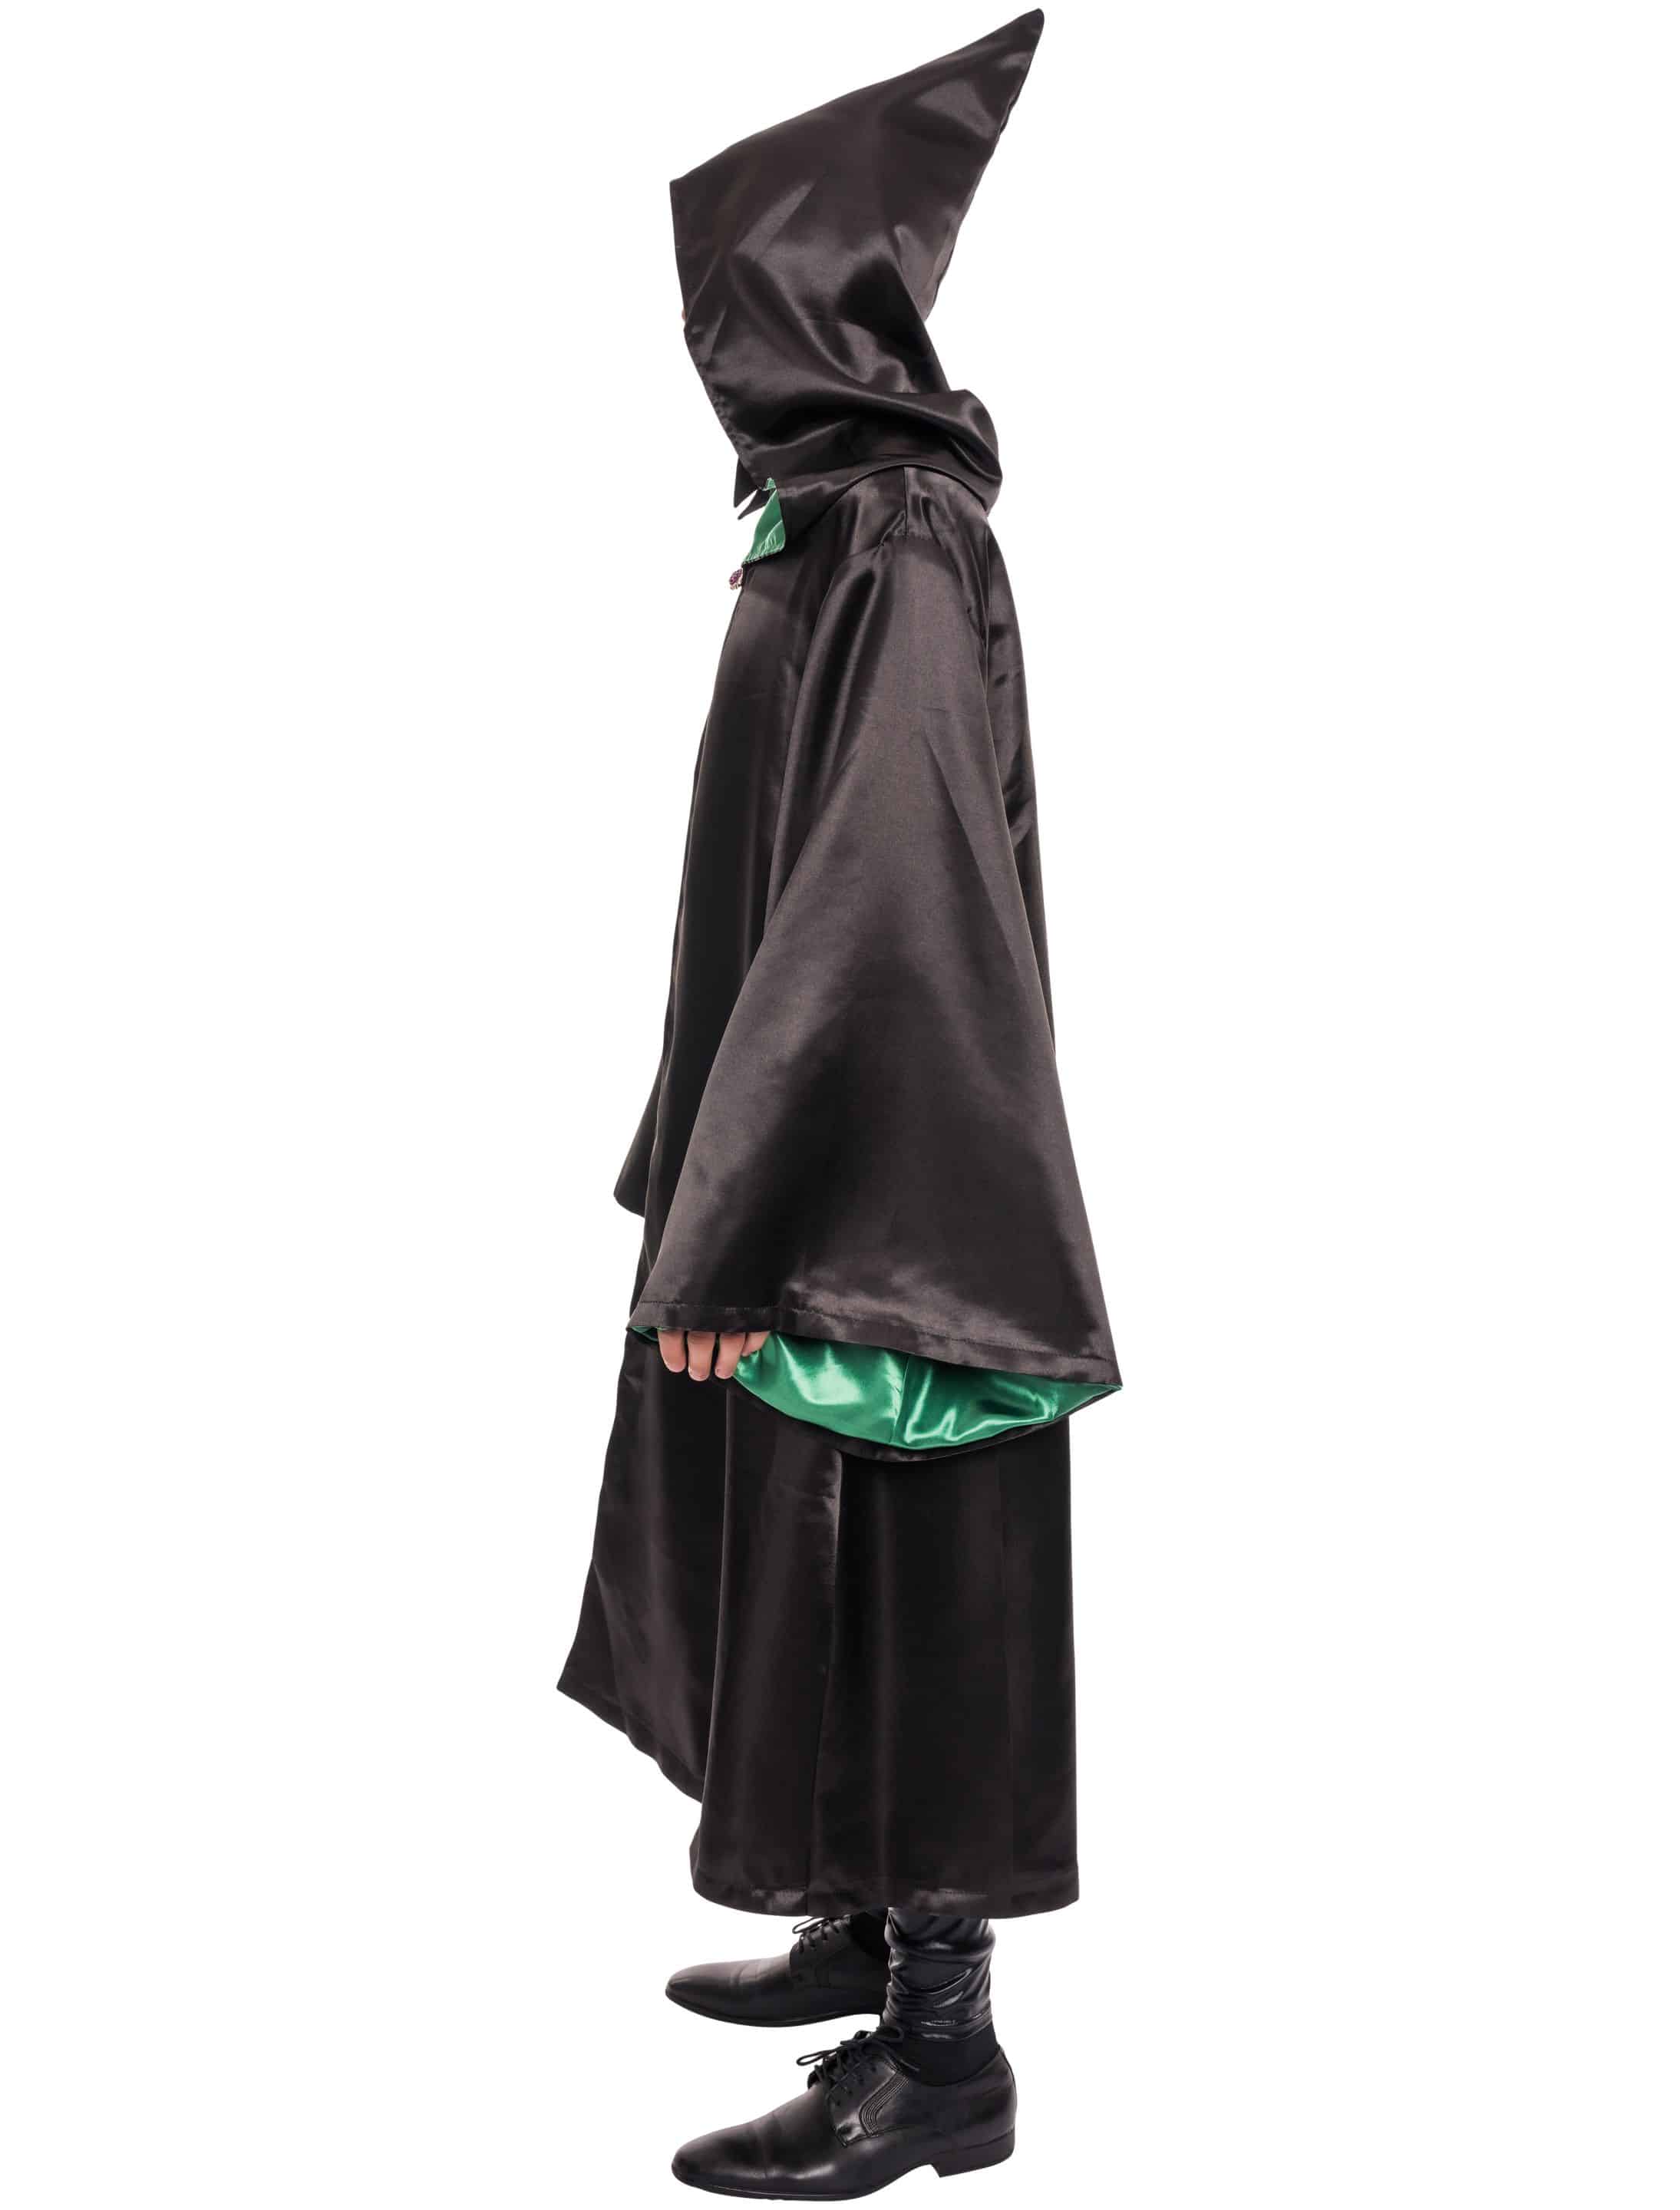 Zauberer Robe Erwachsene schwarz/grün one size